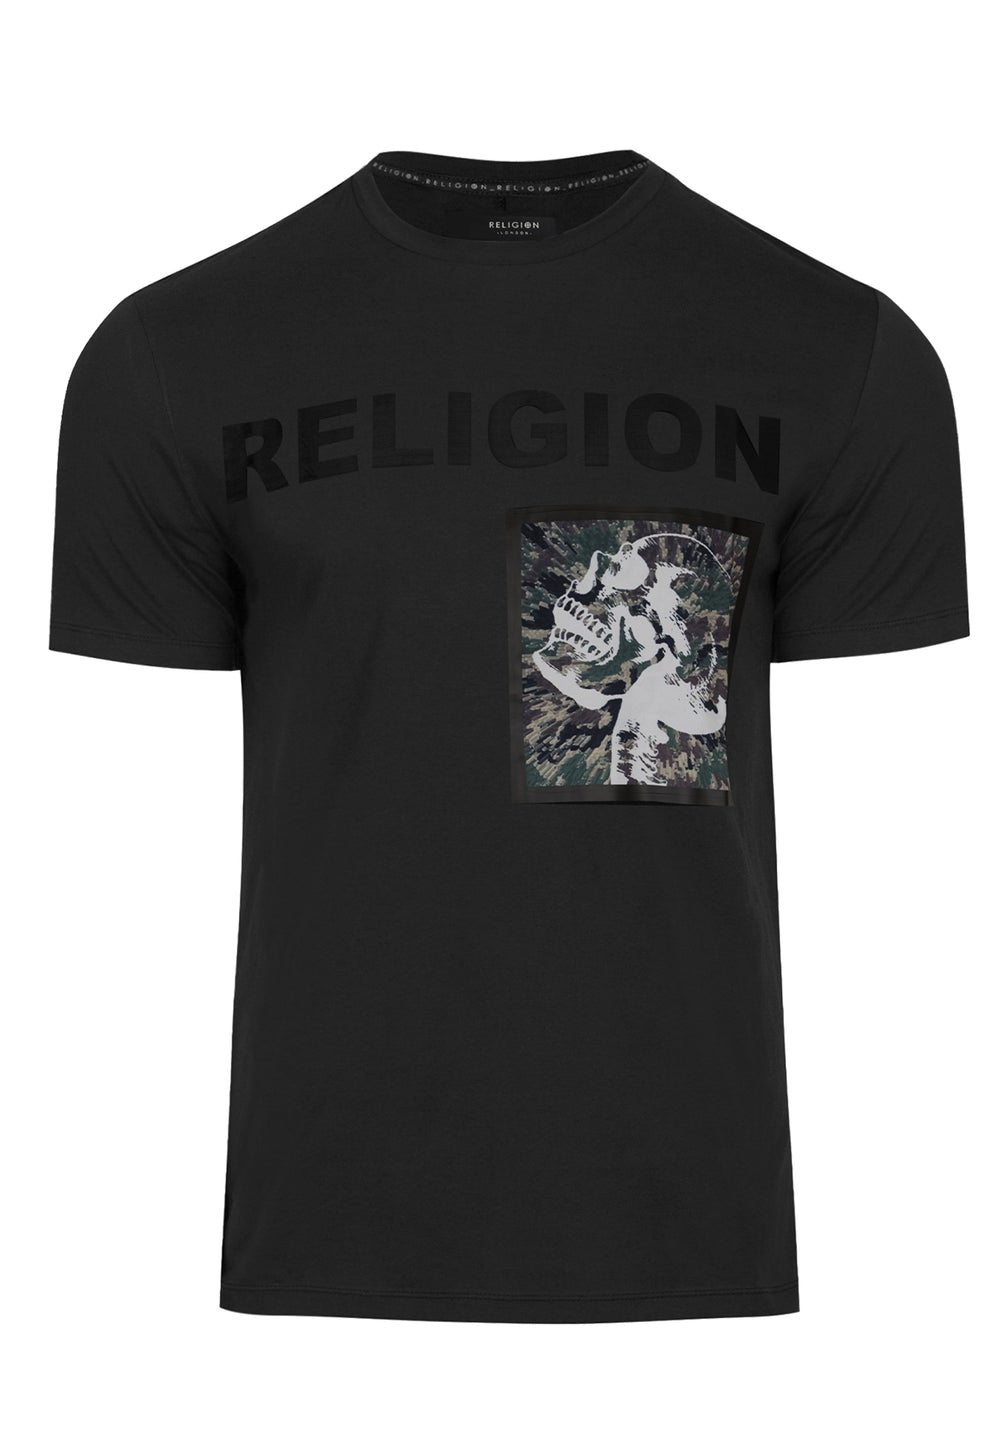 Religion - Siege Tee - Black